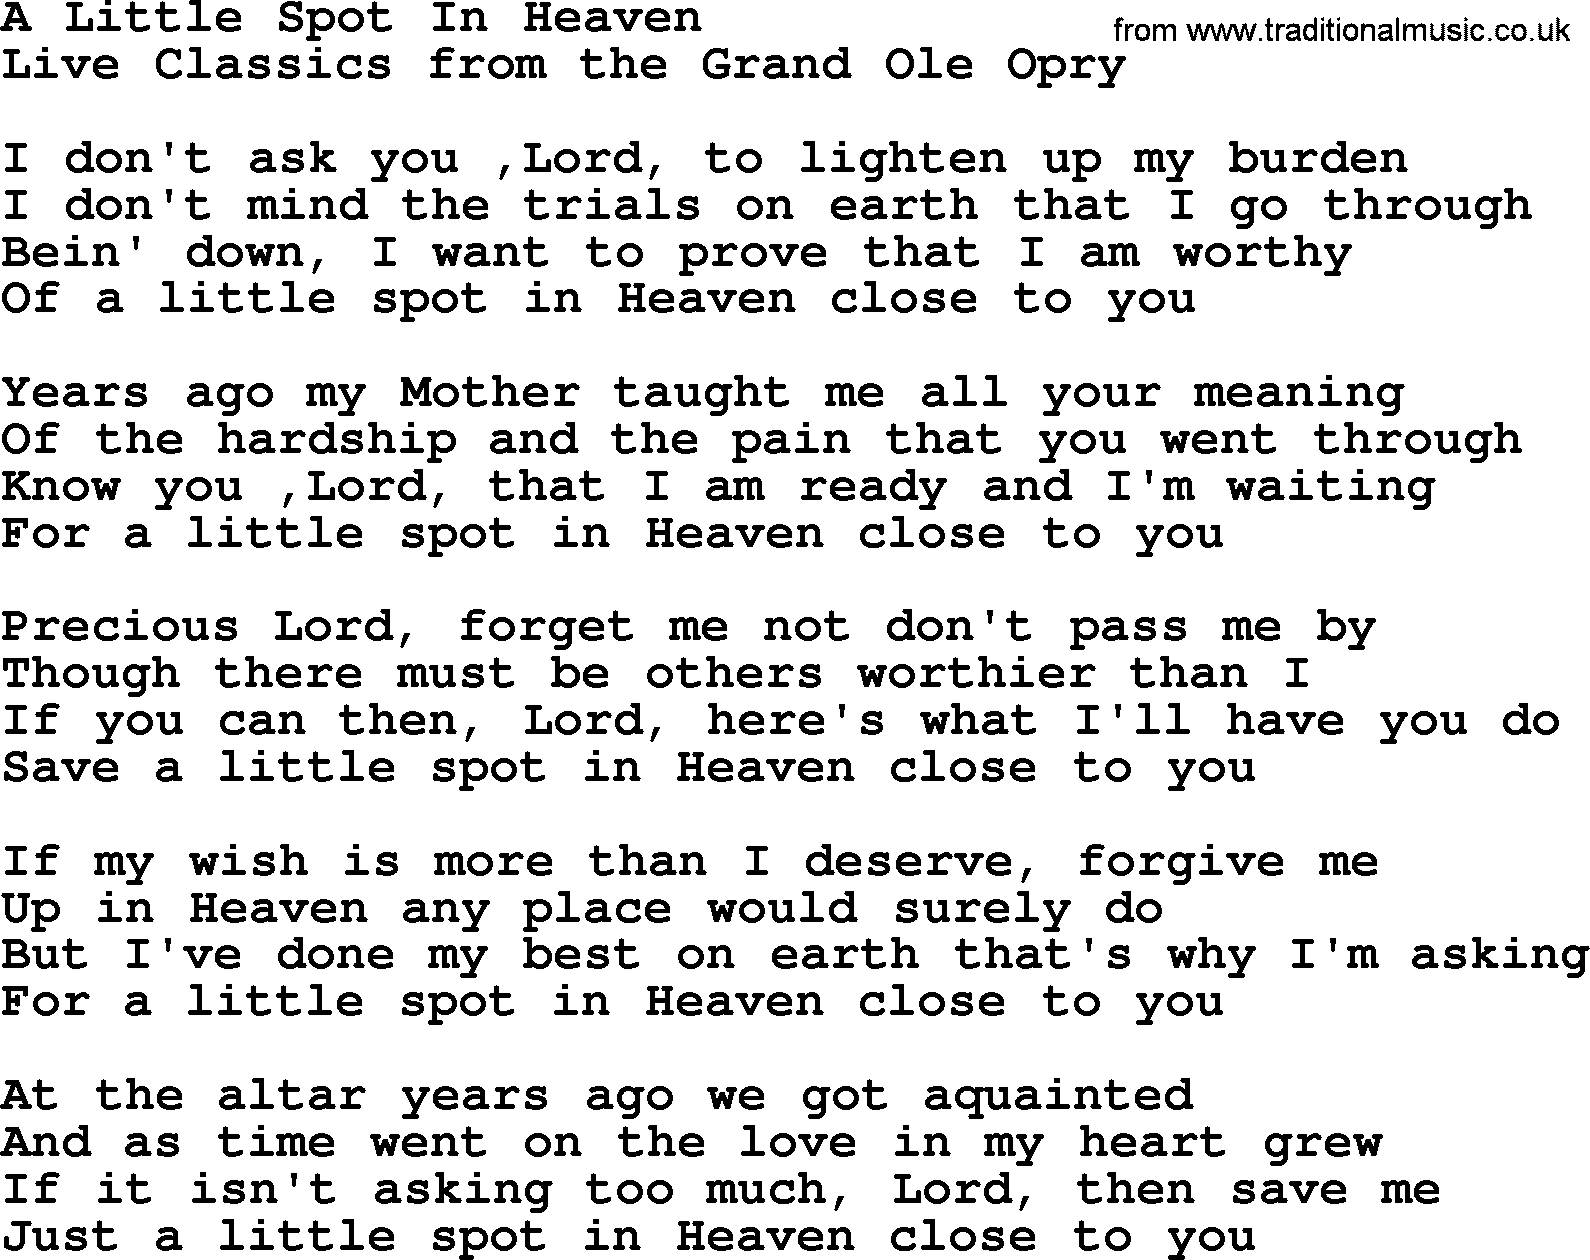 Marty Robbins song: A Little Spot In Heaven, lyrics